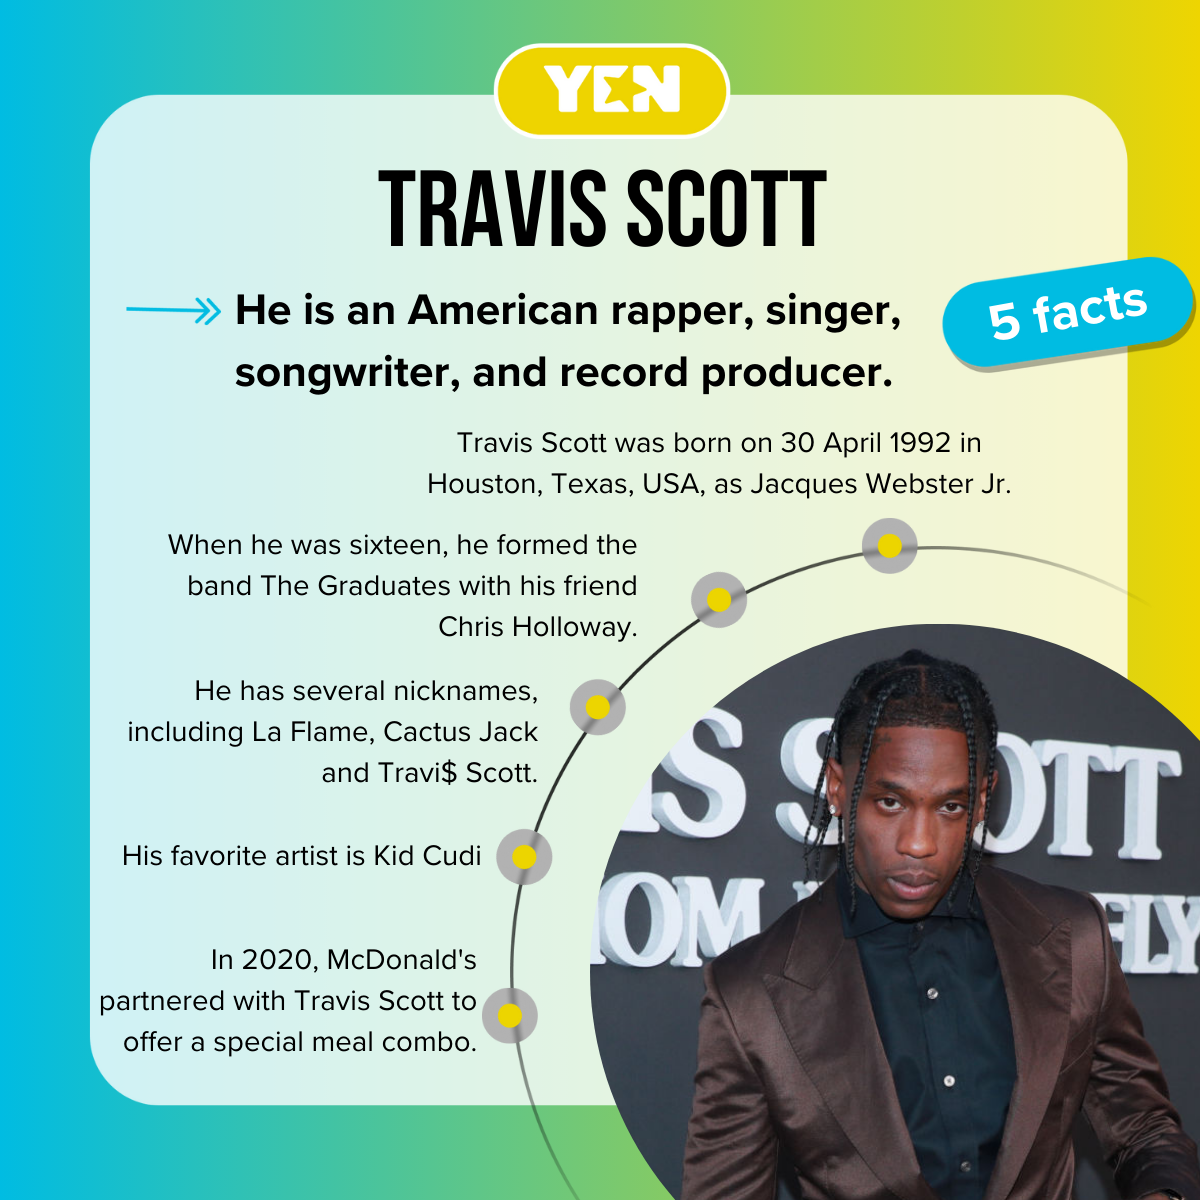 5 facts about Travis Scott